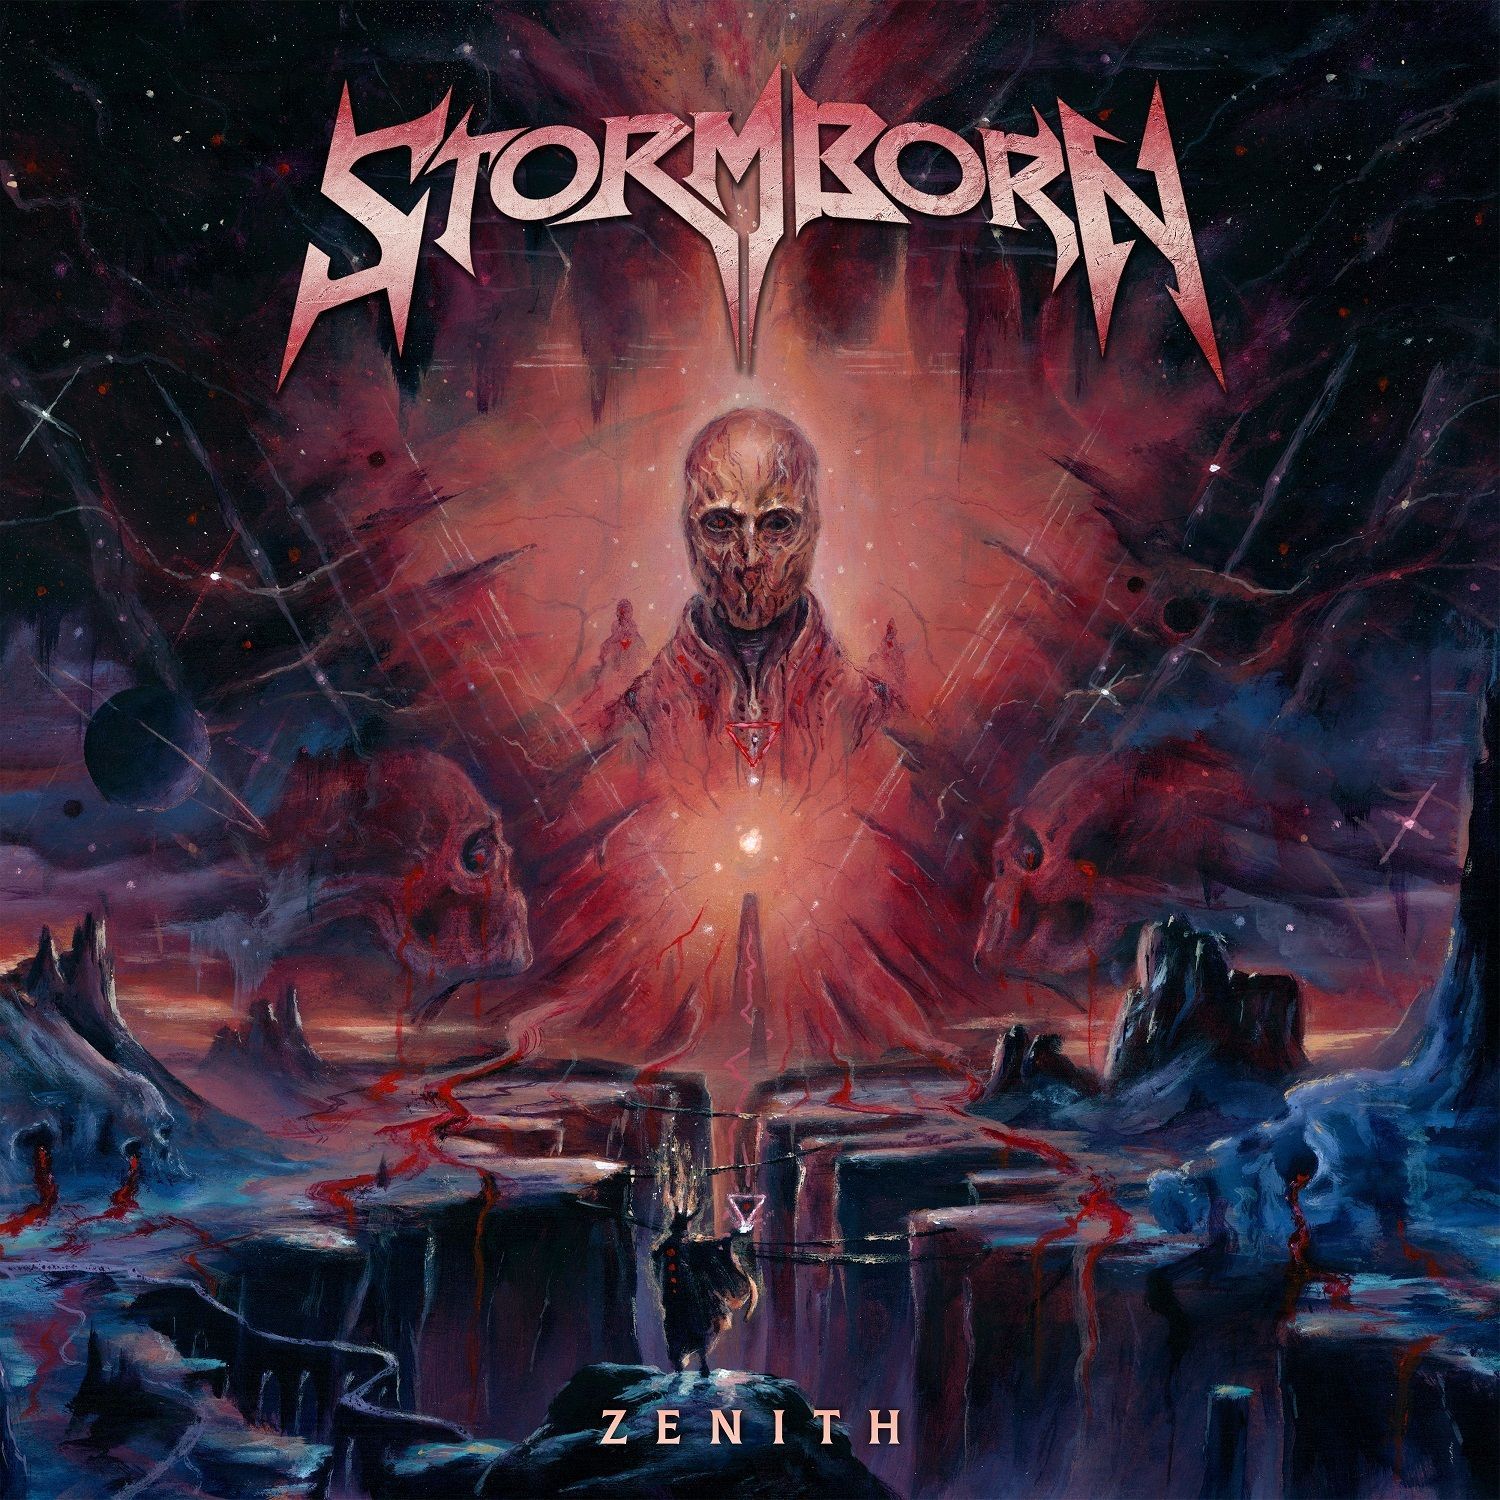 Stormborn - Serpentine (clip)